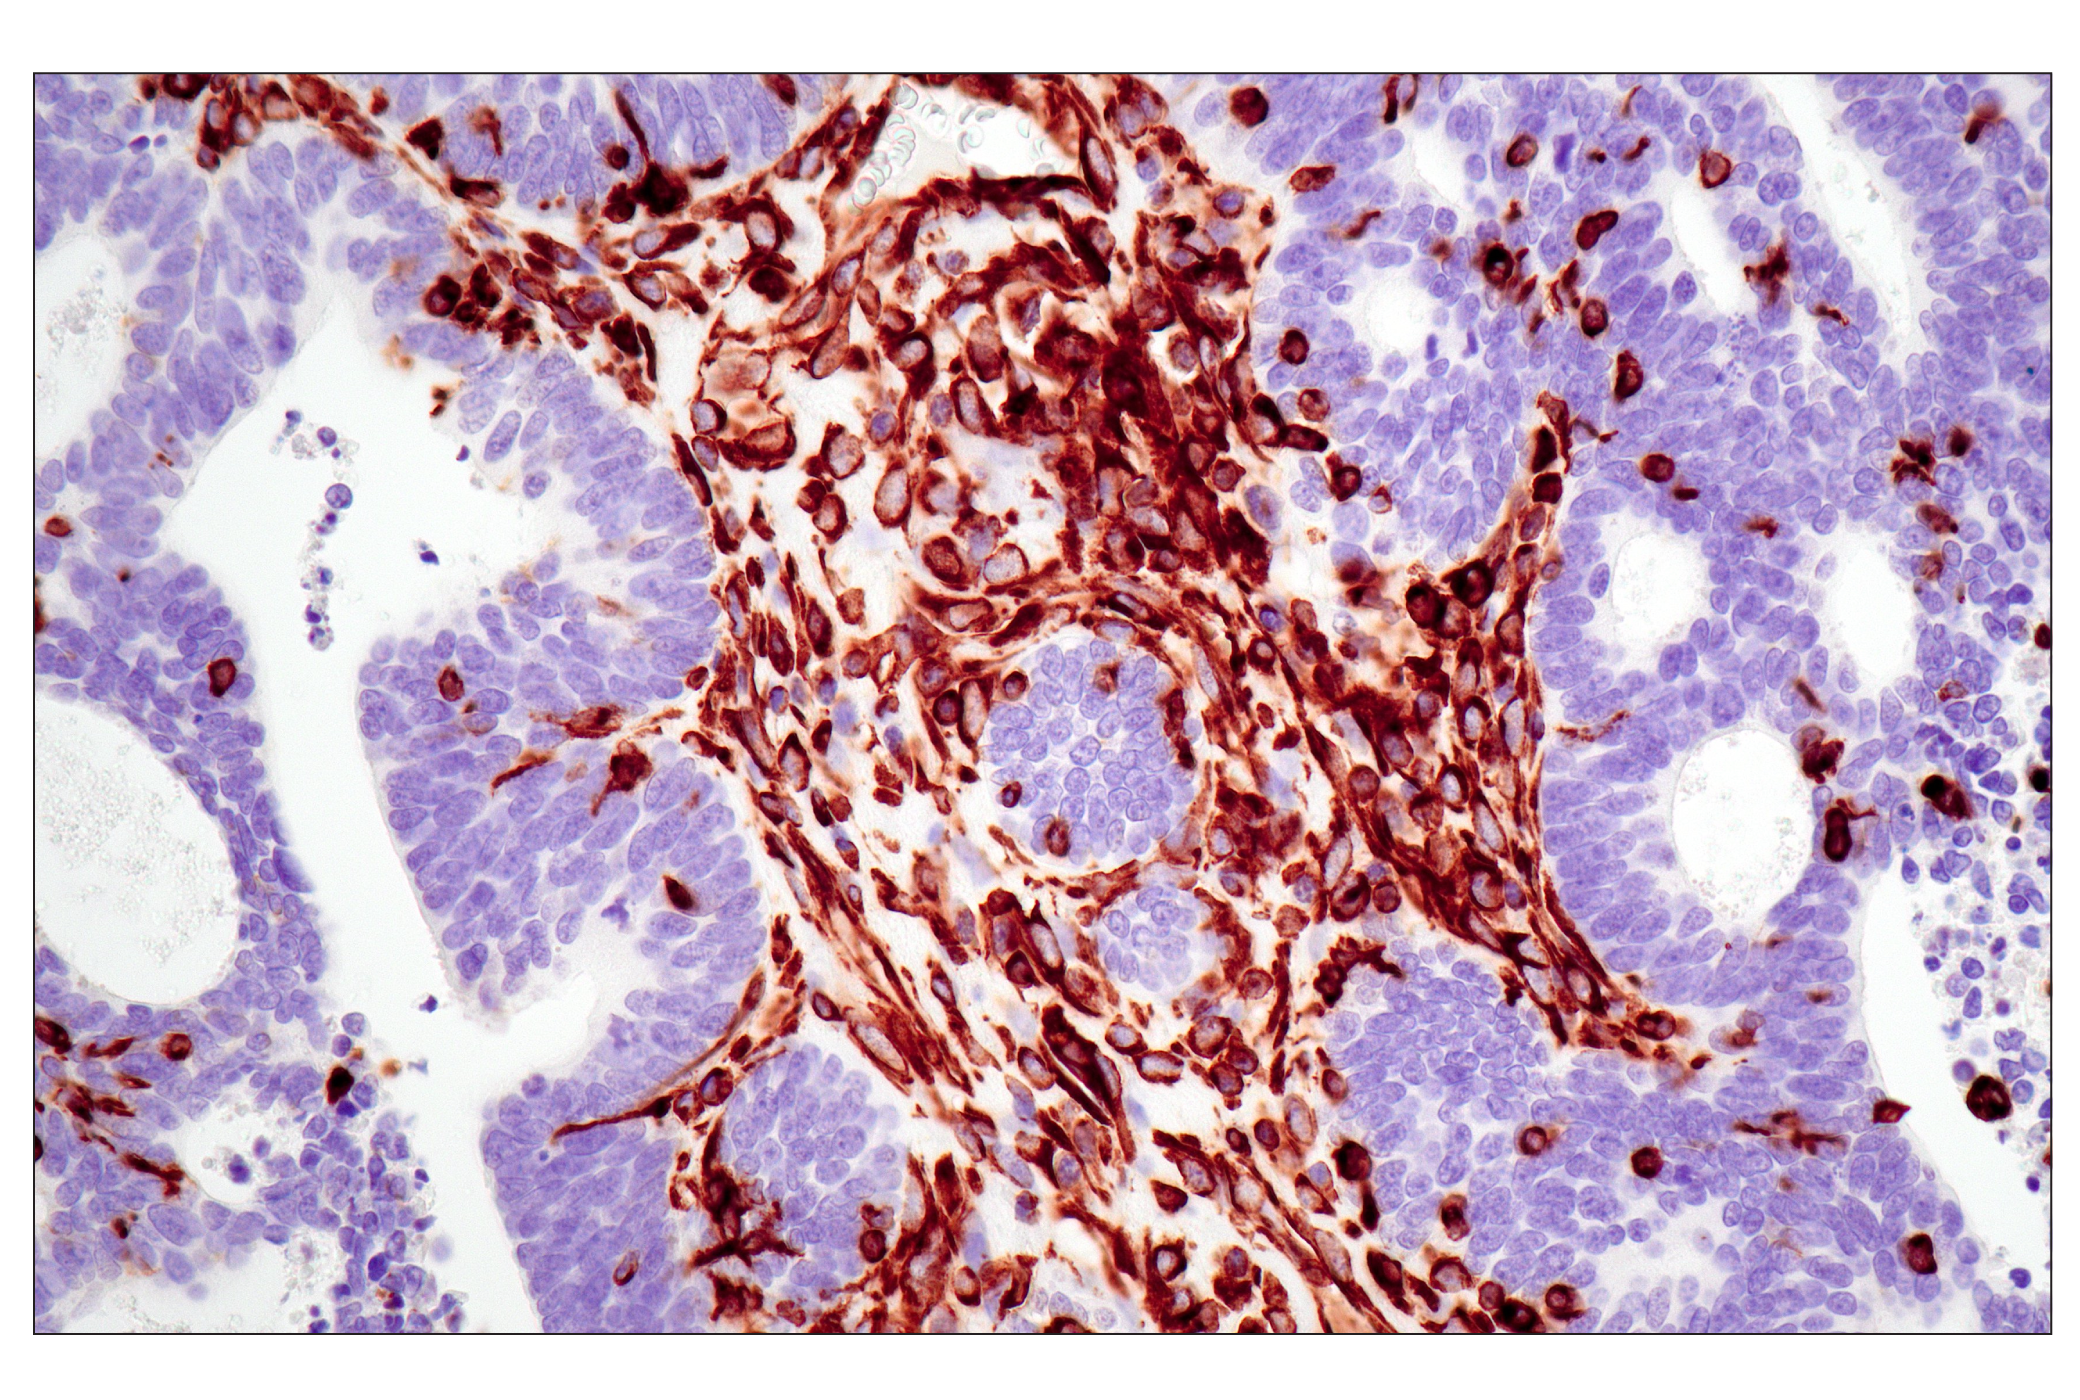  Image 29: Cytoskeletal Marker Antibody Sampler Kit